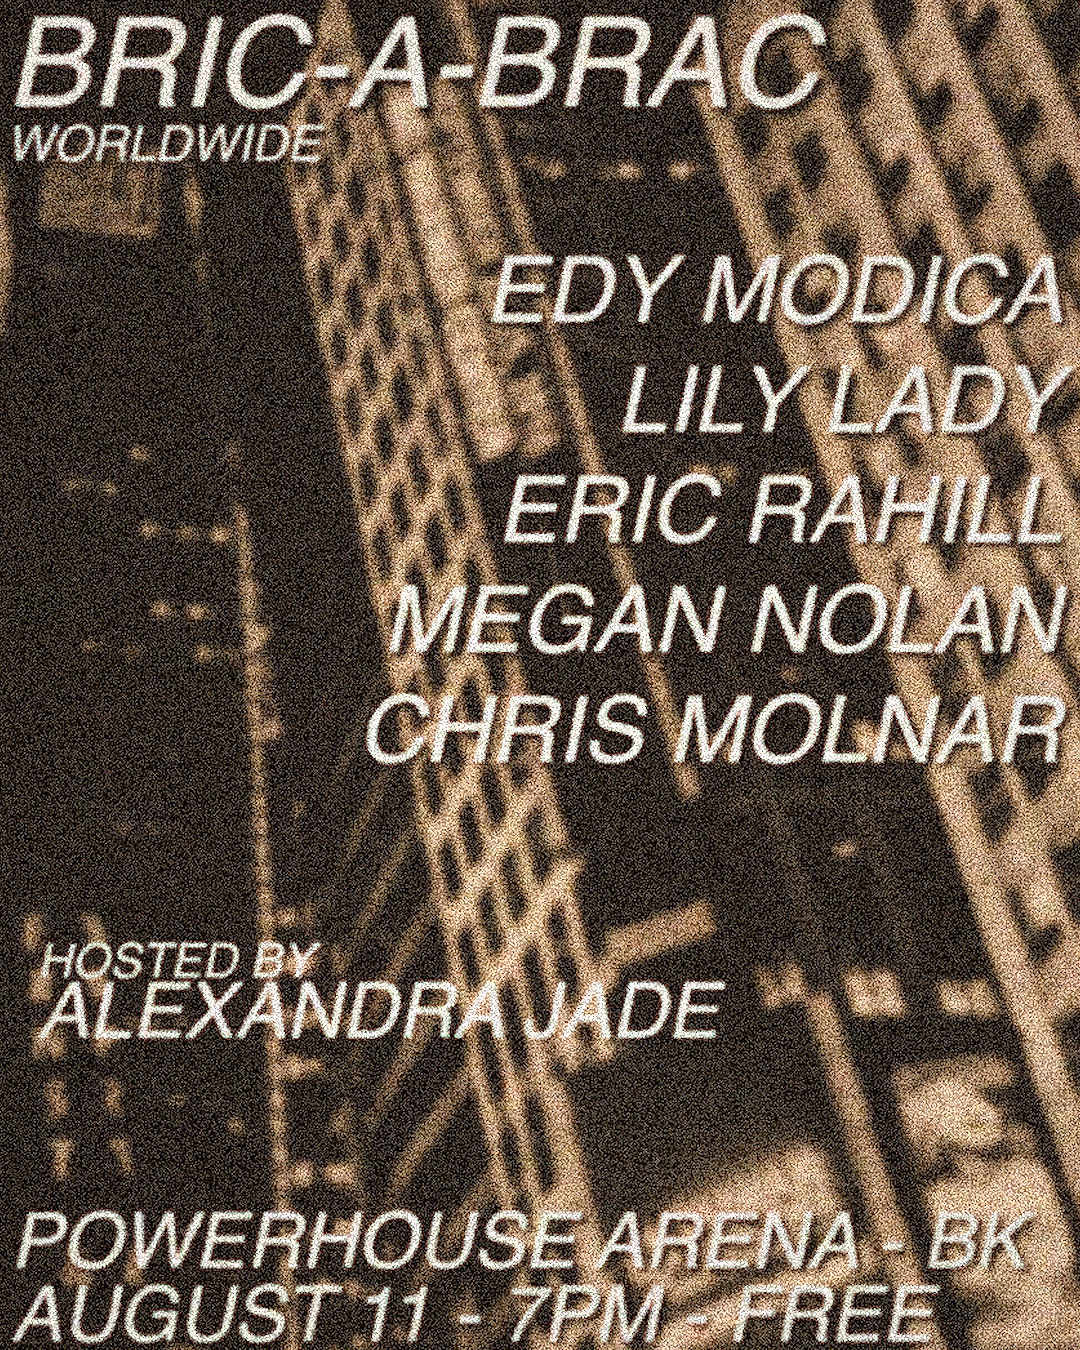 Bric-a-Brac featuring Edy Modica, Lily Lady, Megan Nolan, Eric Rahill and Chris Molnar